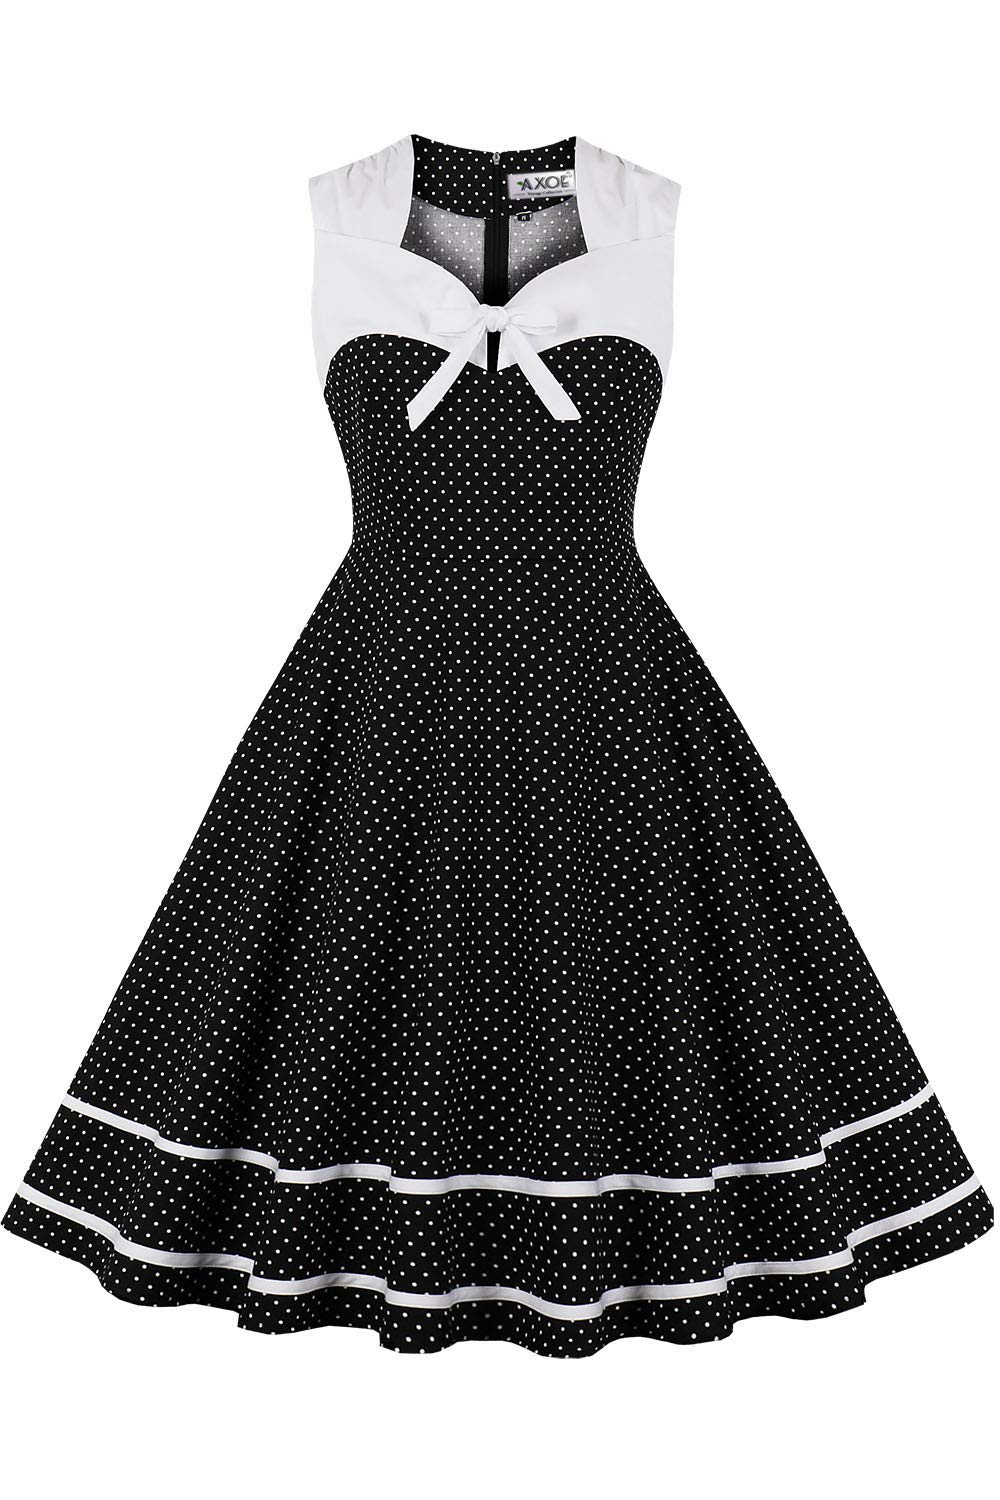 AXOE Damen Petticoat Kleid Rockn Roll Abendkleid 50er Jahre Knielang Schwarz Weiß Punkte Gr.46, XXL